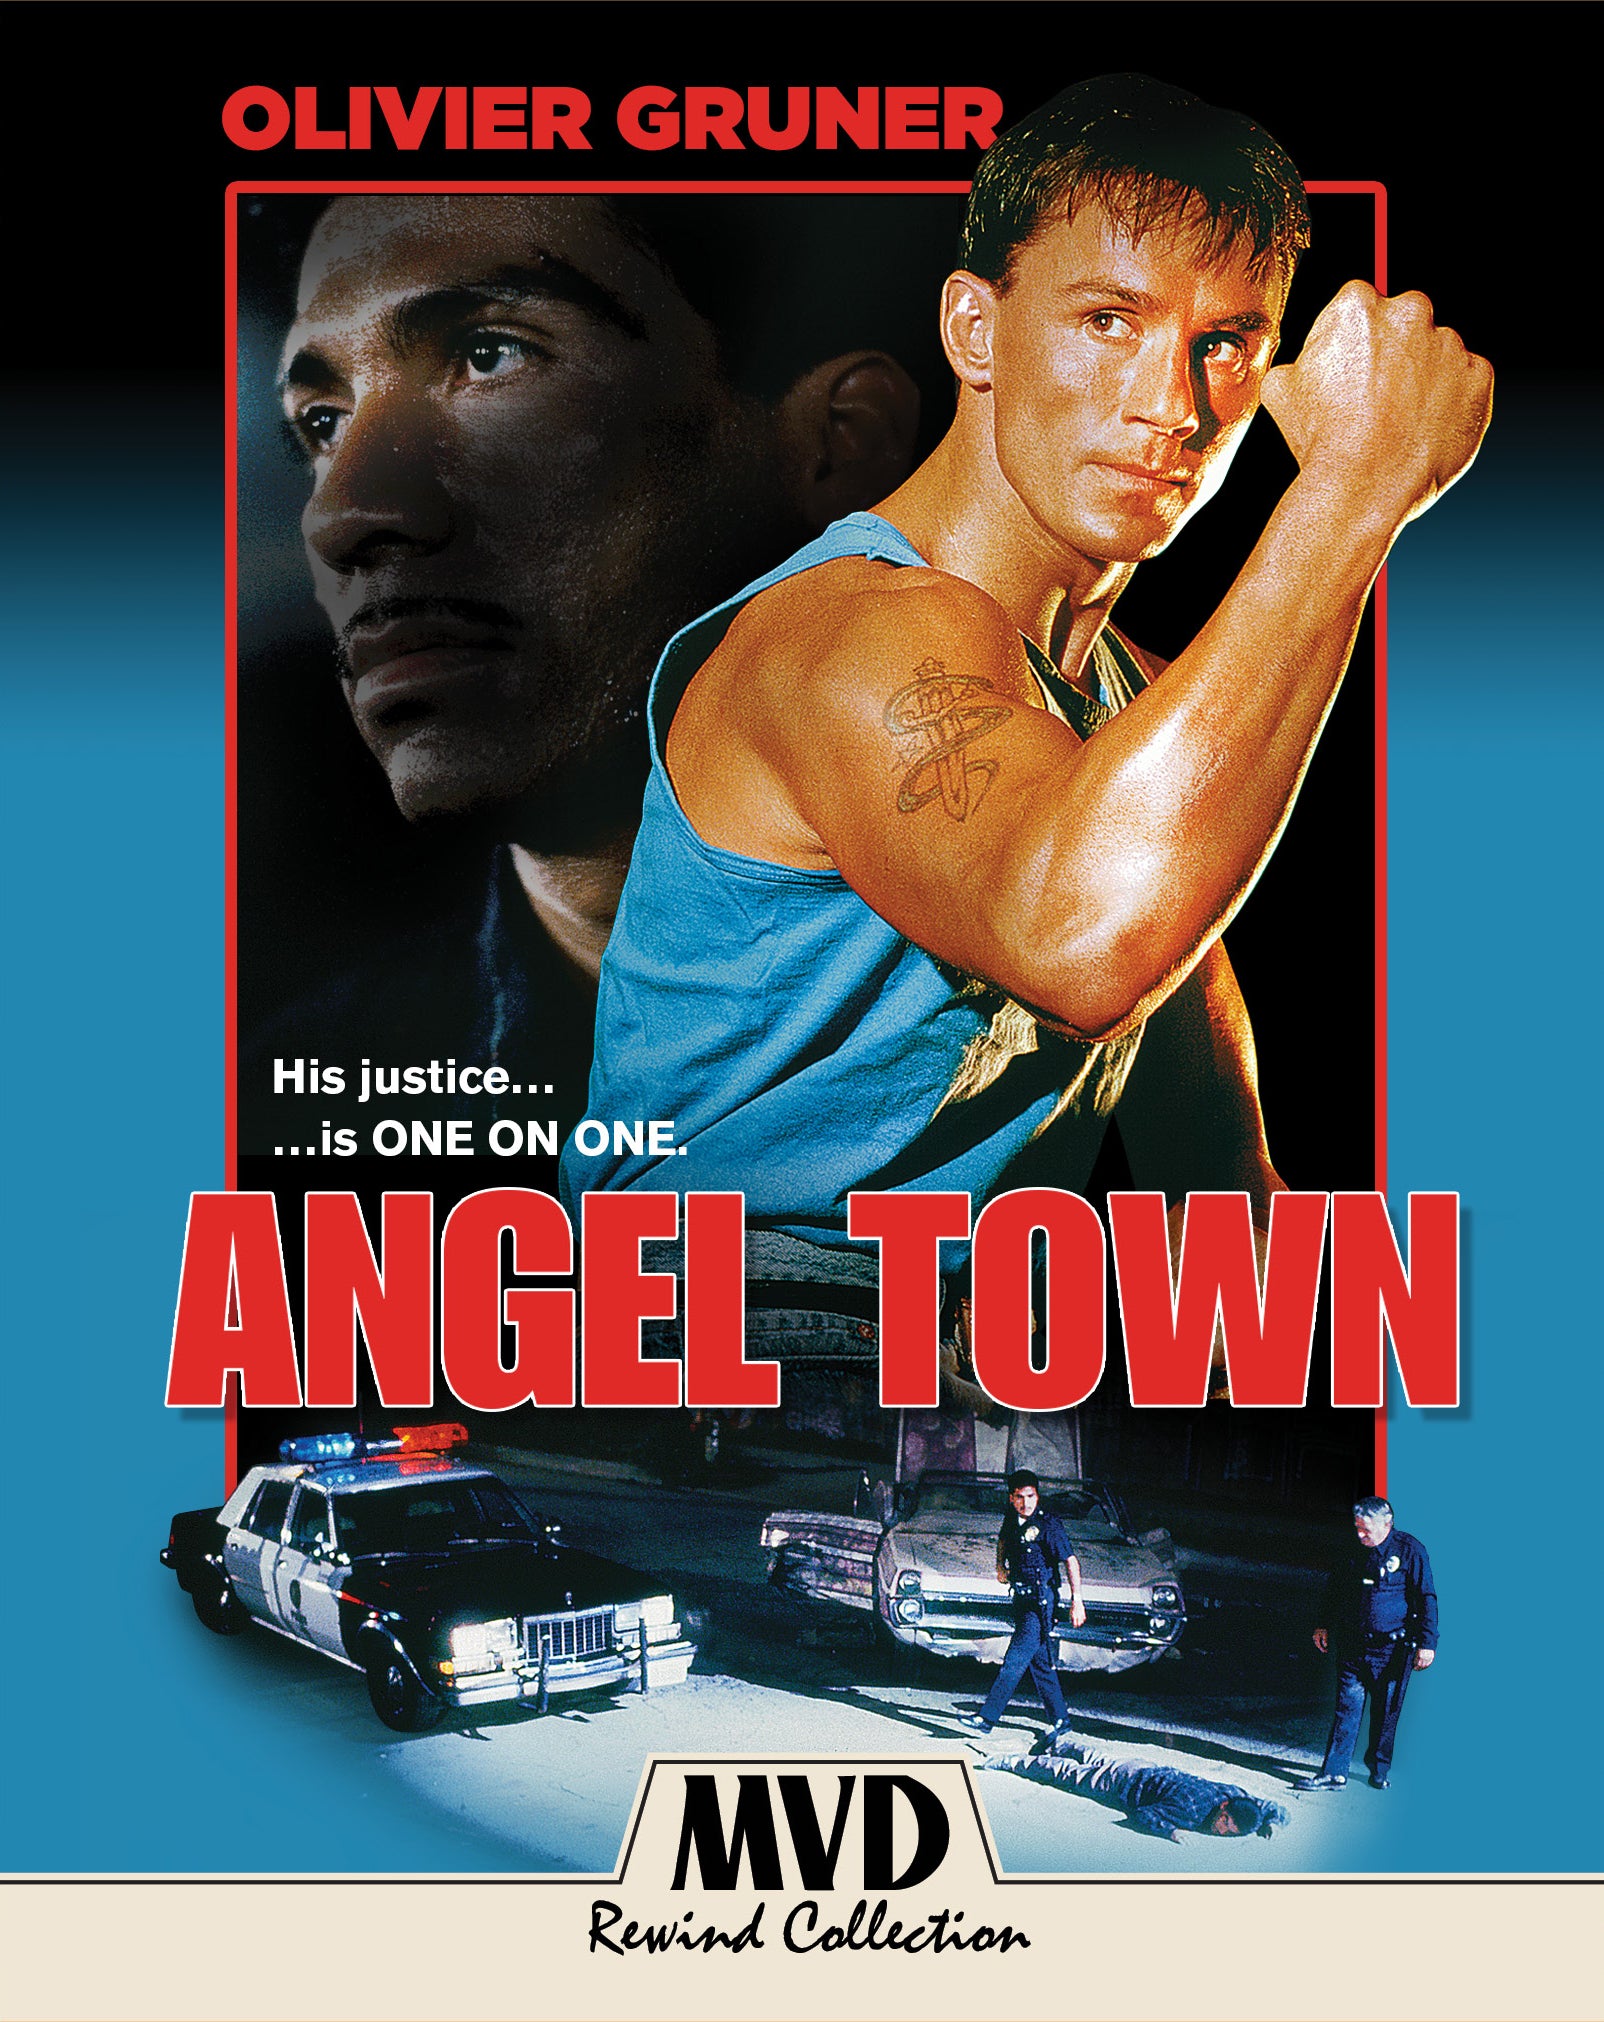 Angel Town [Blu-ray] cover art